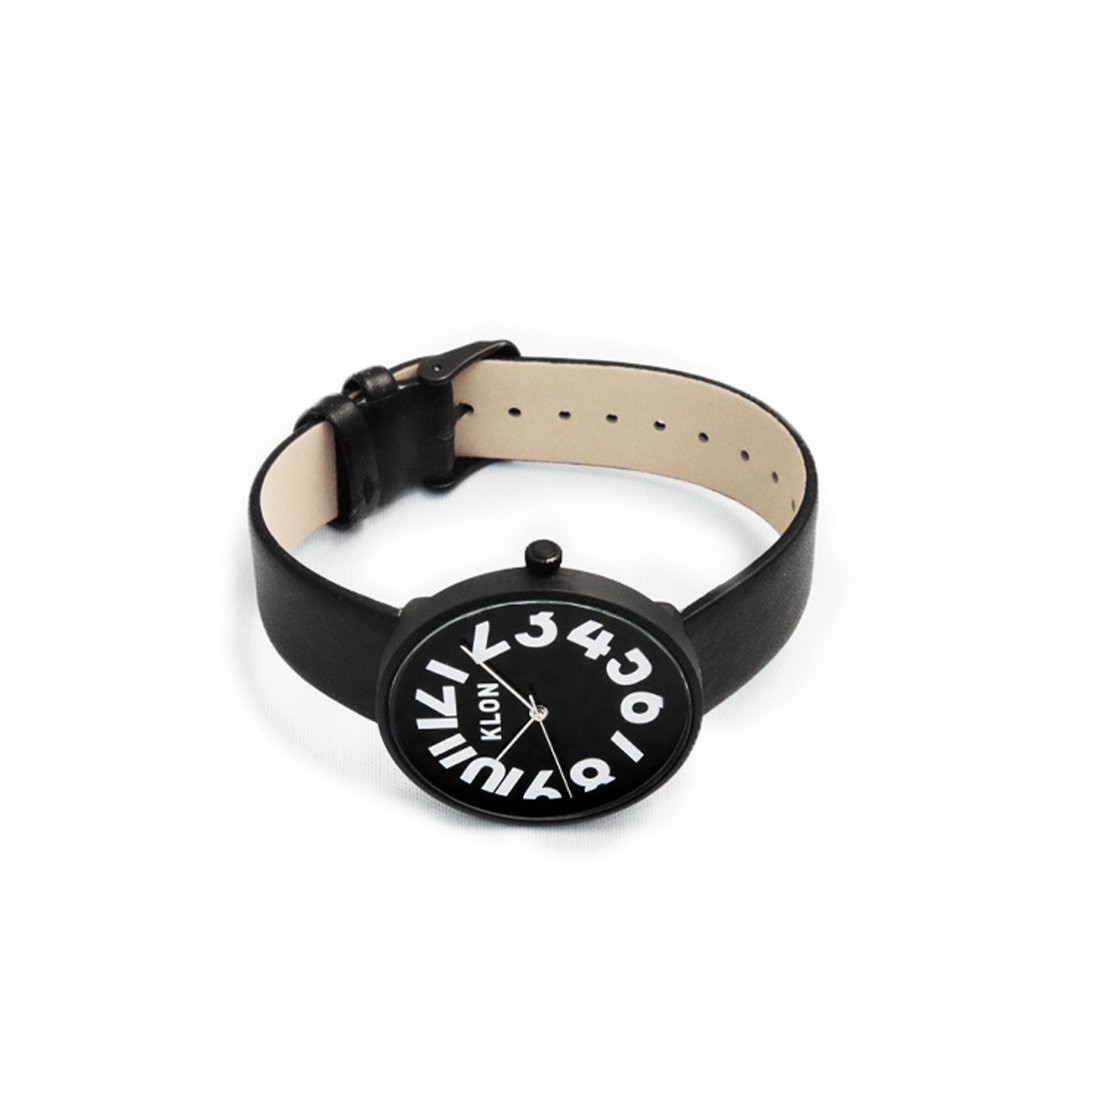 KLON HIDE TIME BLACK FRAME 40mm カジュアル 腕時計